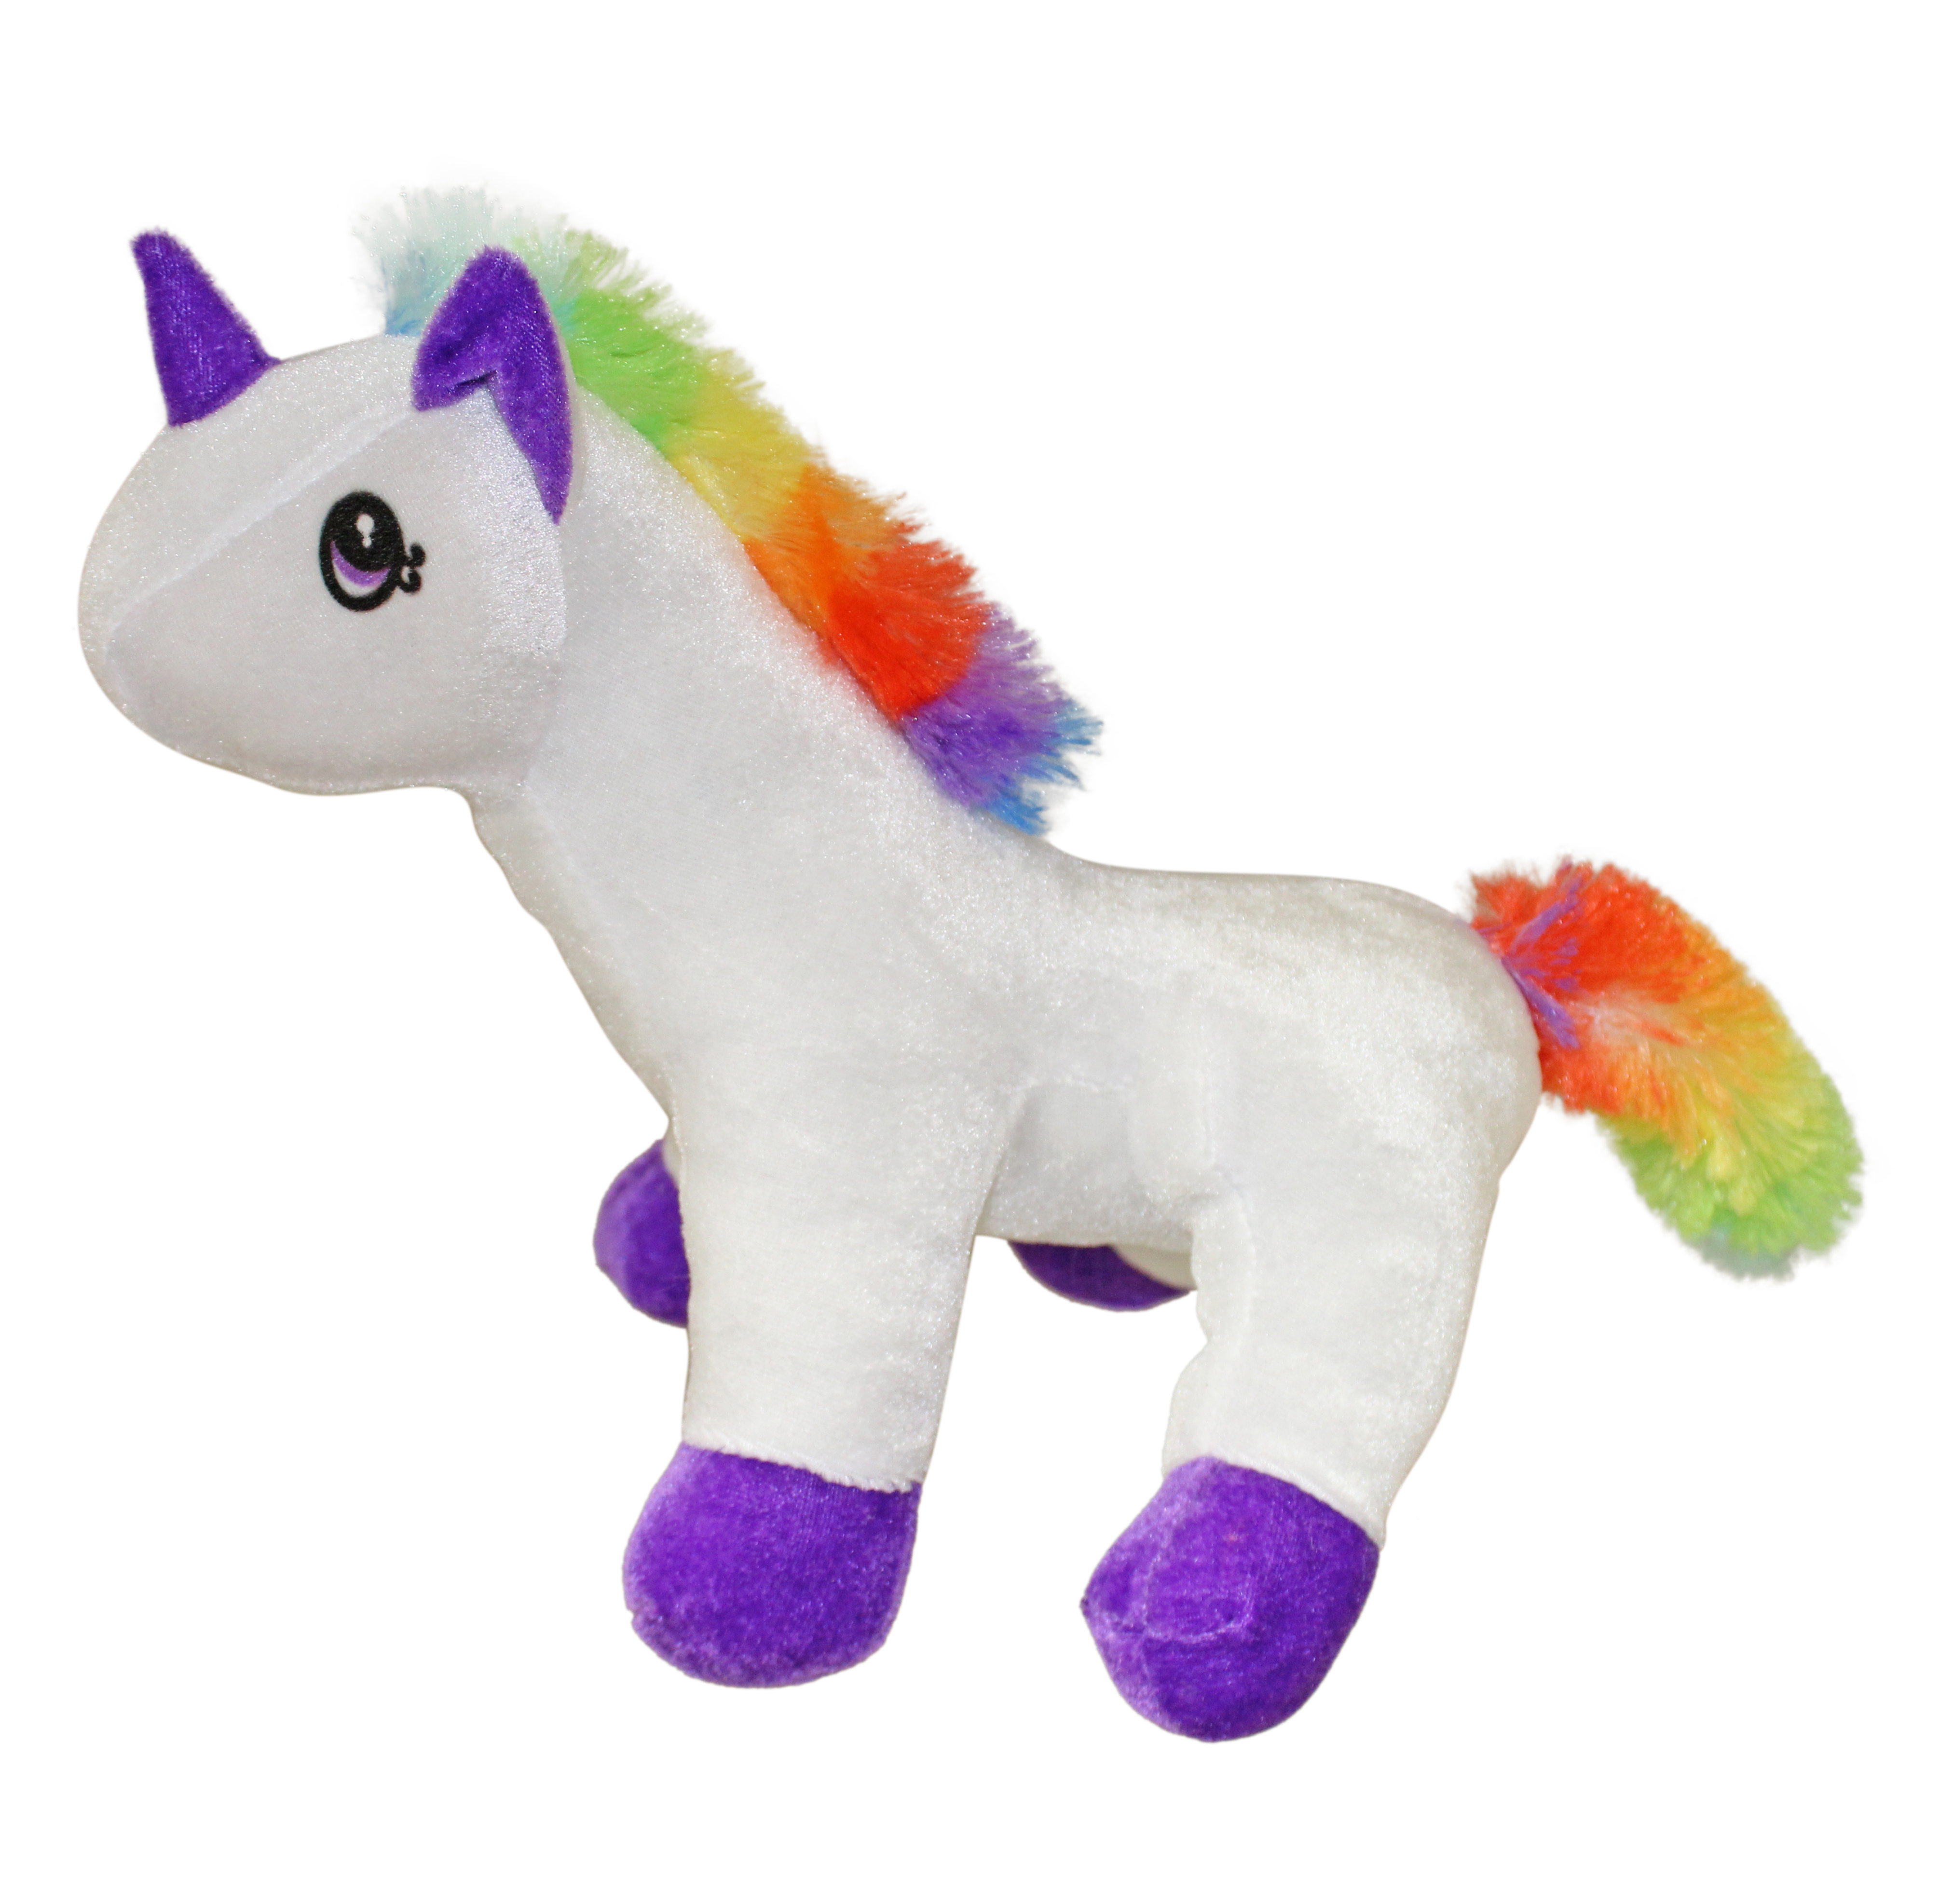 Plush Pal 12" Soft & Fluffy Purple Unicorn Stuffed Animal Toy with Rainbow Tail And Mane - image 5 of 5